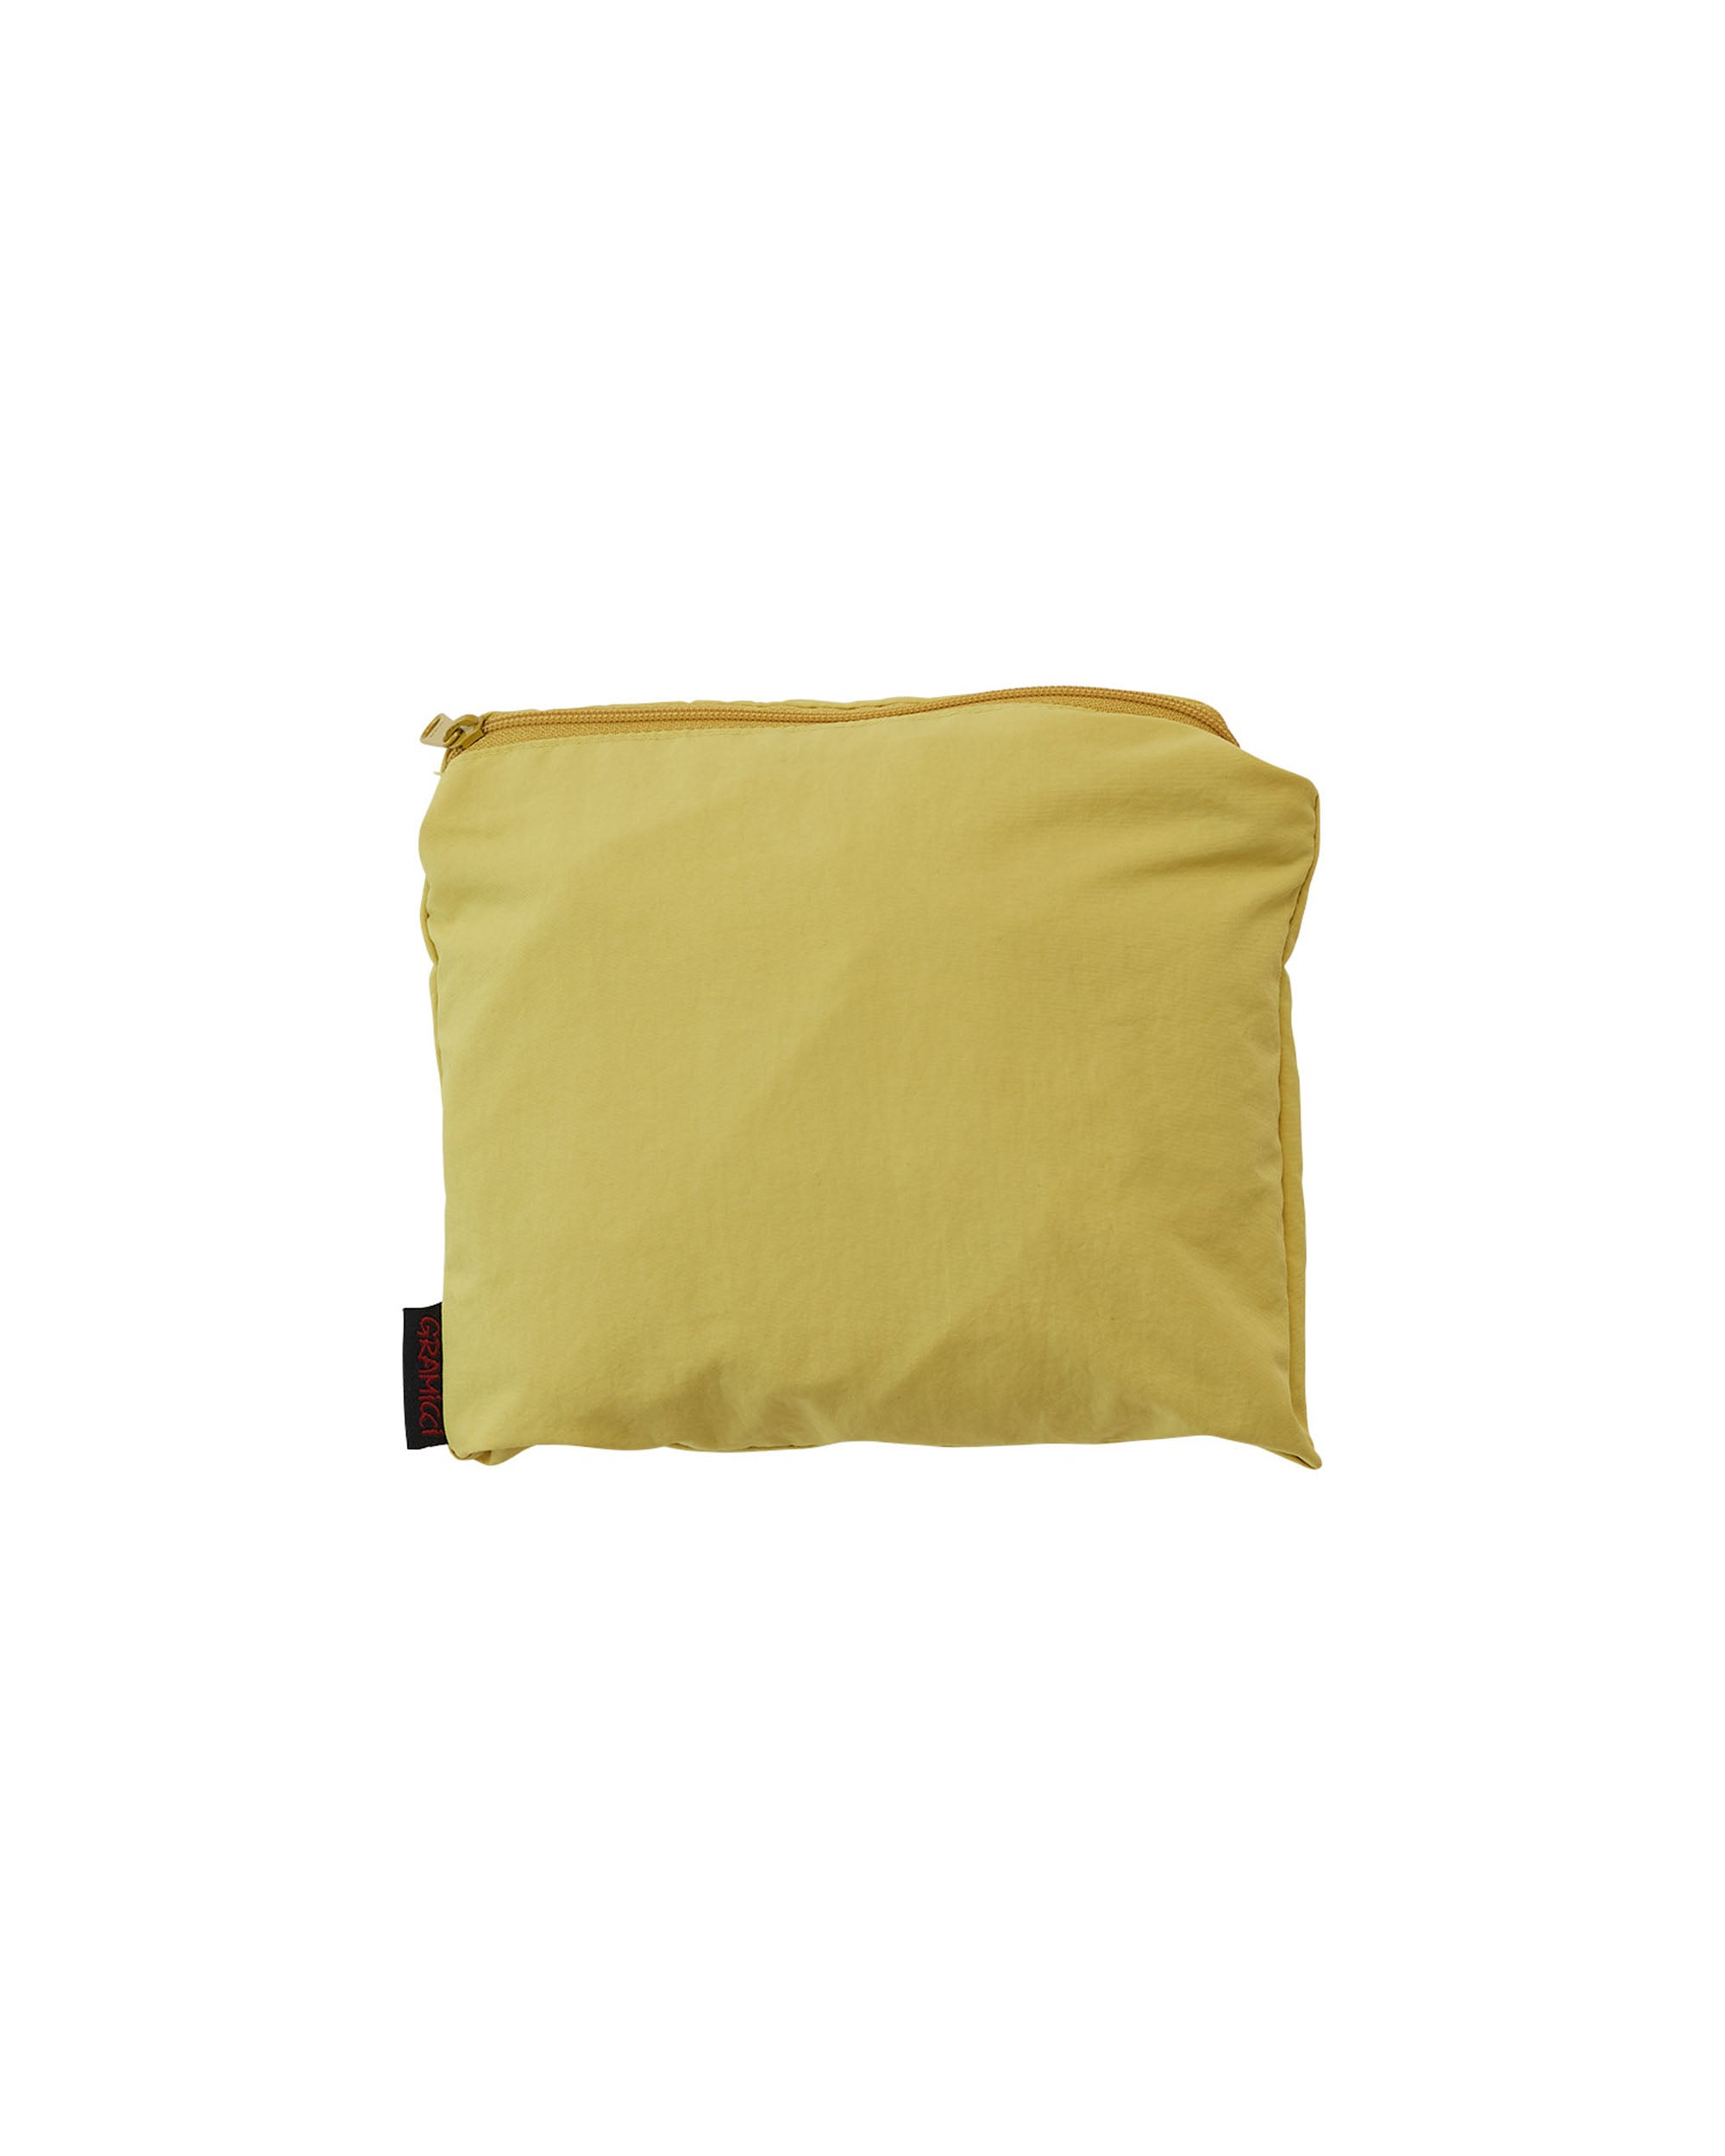 Nylon Packable Midi Skirt - Canary Yellow